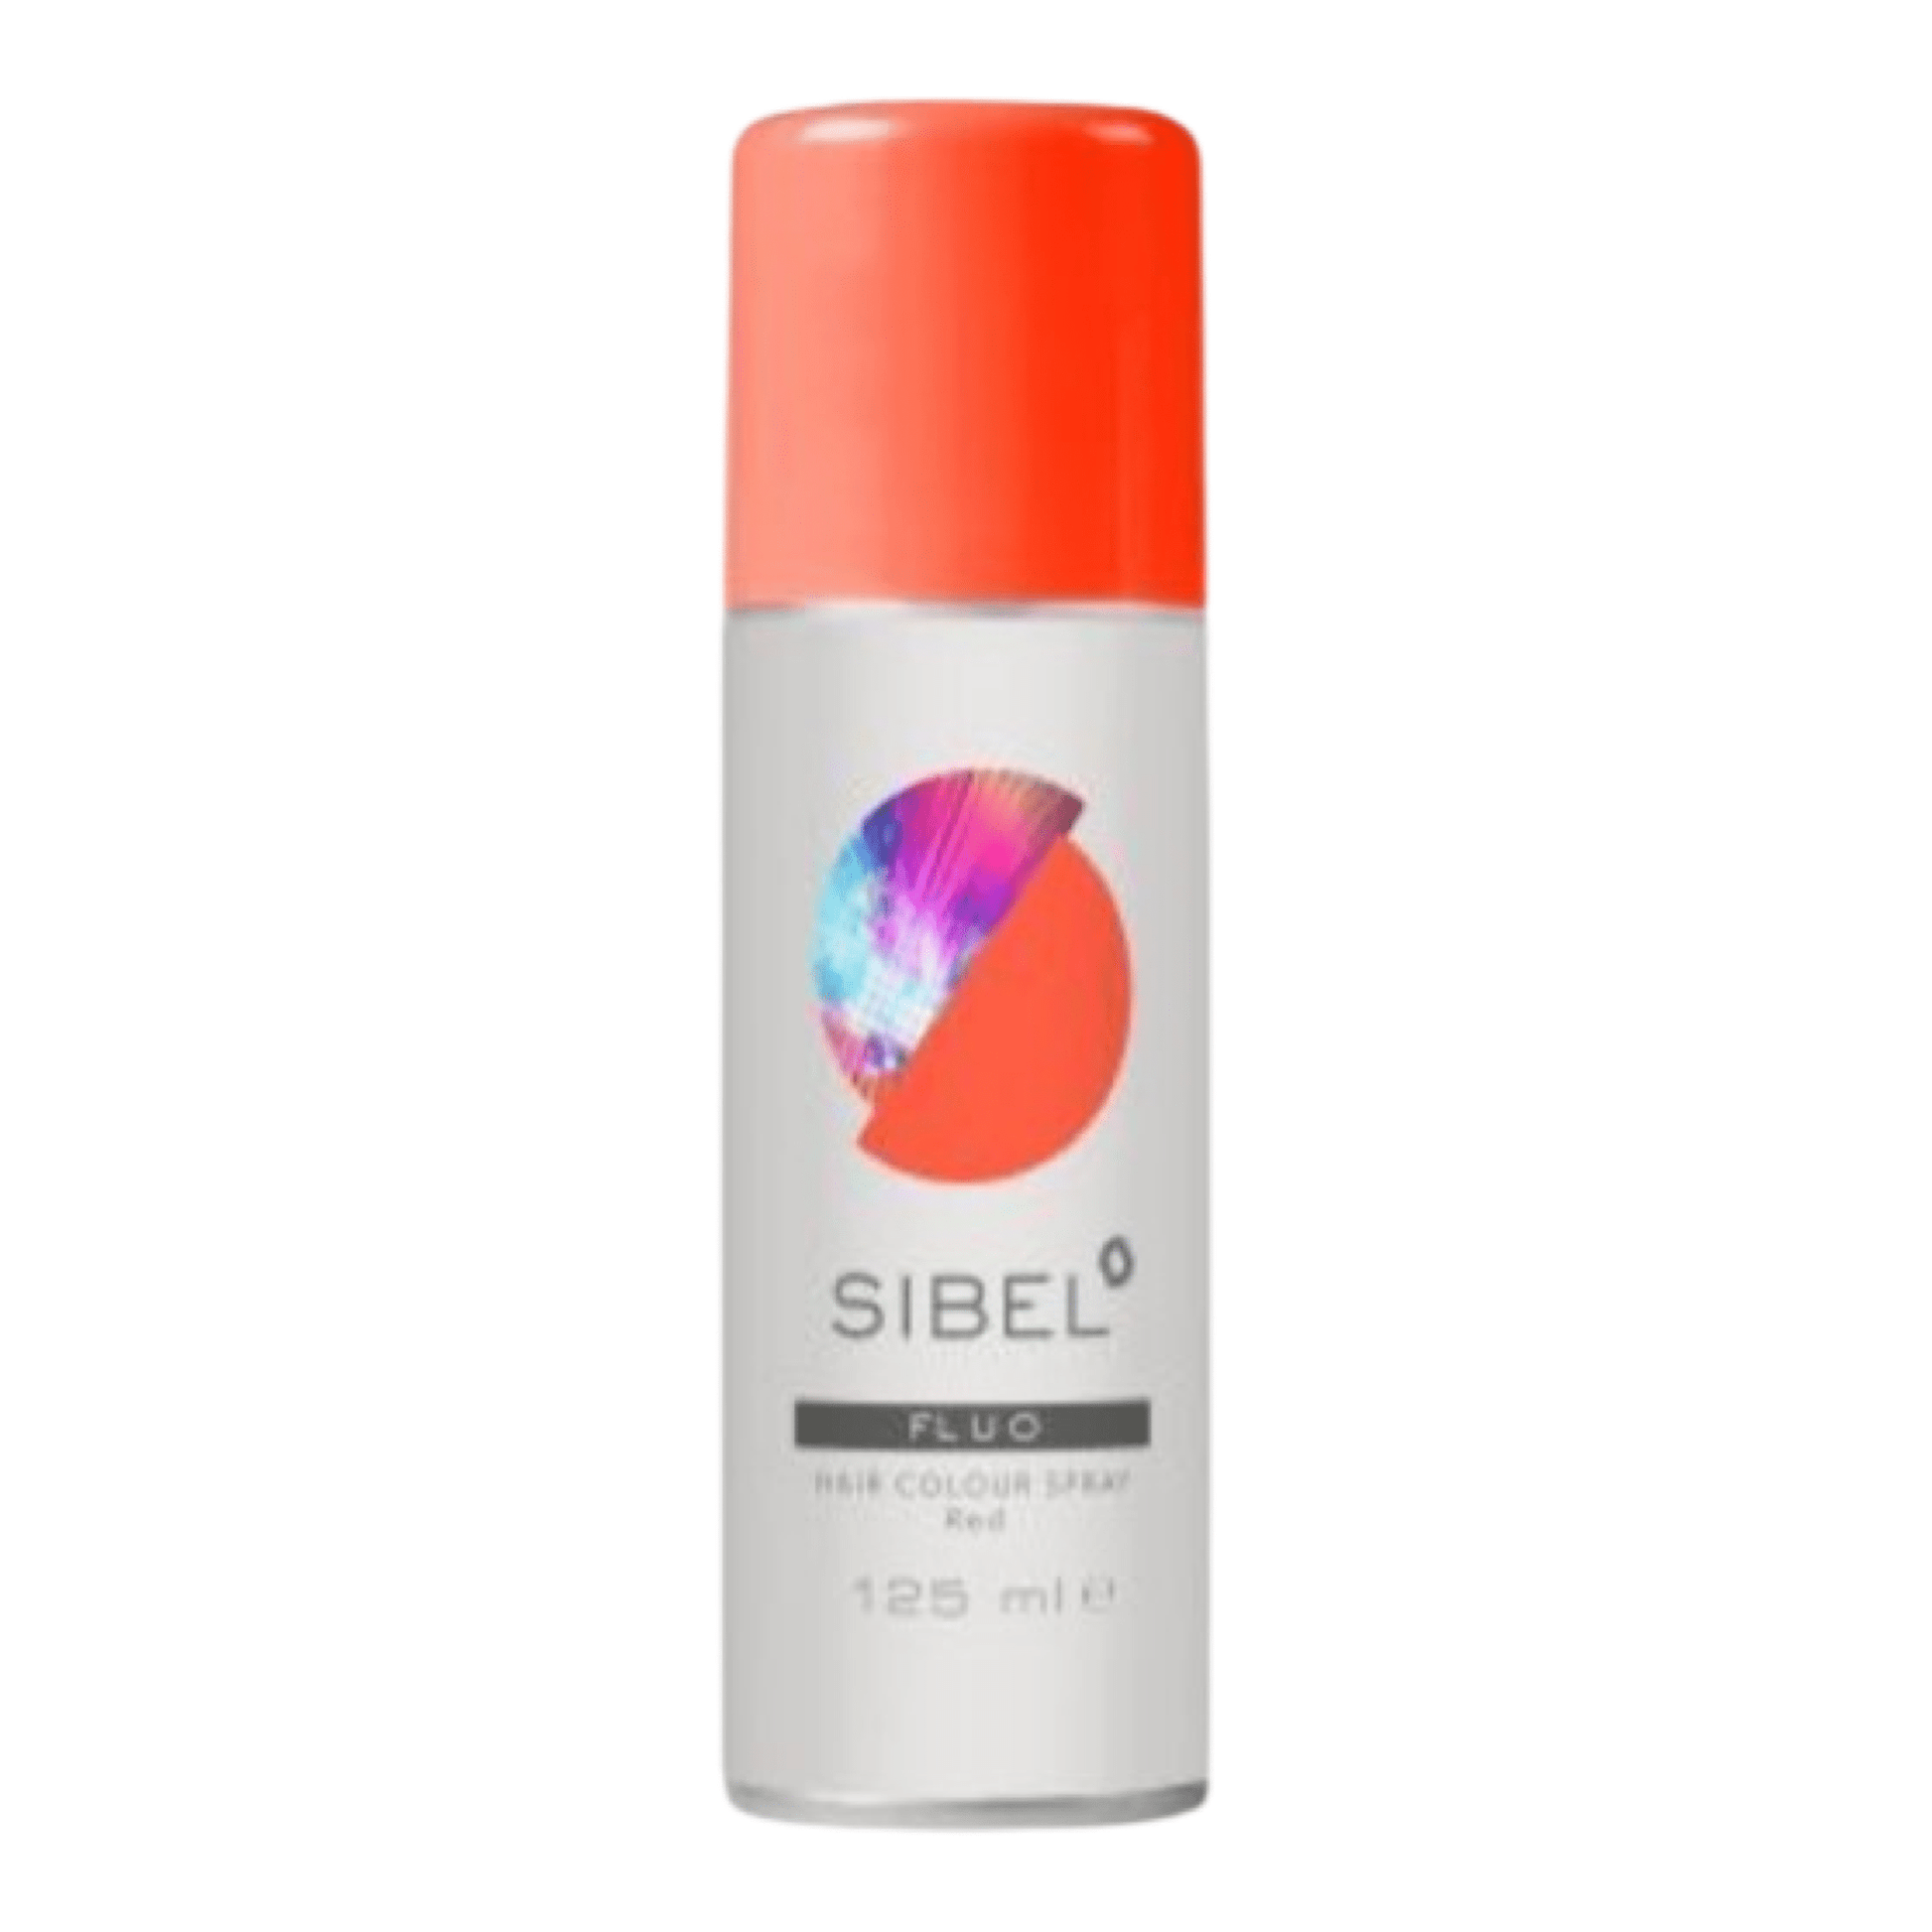 Sibel - color spray red 125 ml - Merle og Wilde